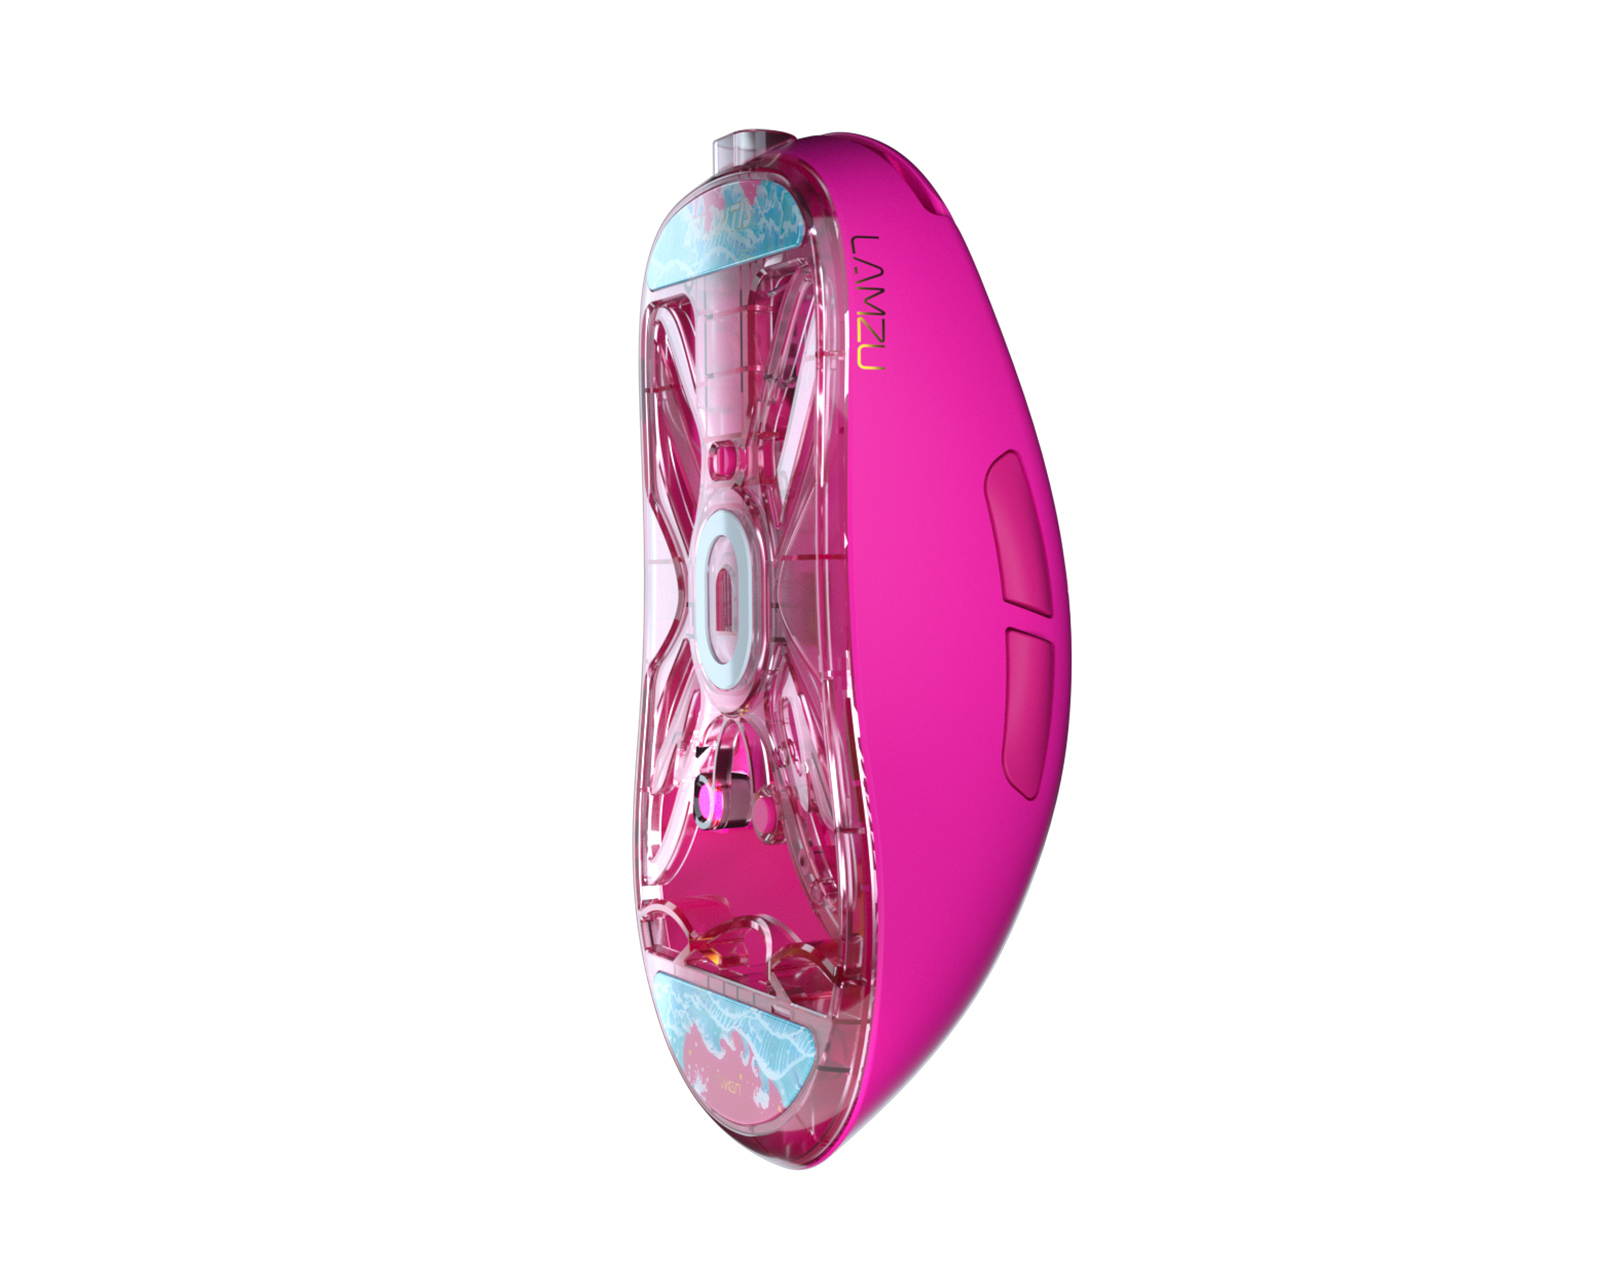 Lamzu Atlantis Wireless Superlight Gaming Mouse - Pink